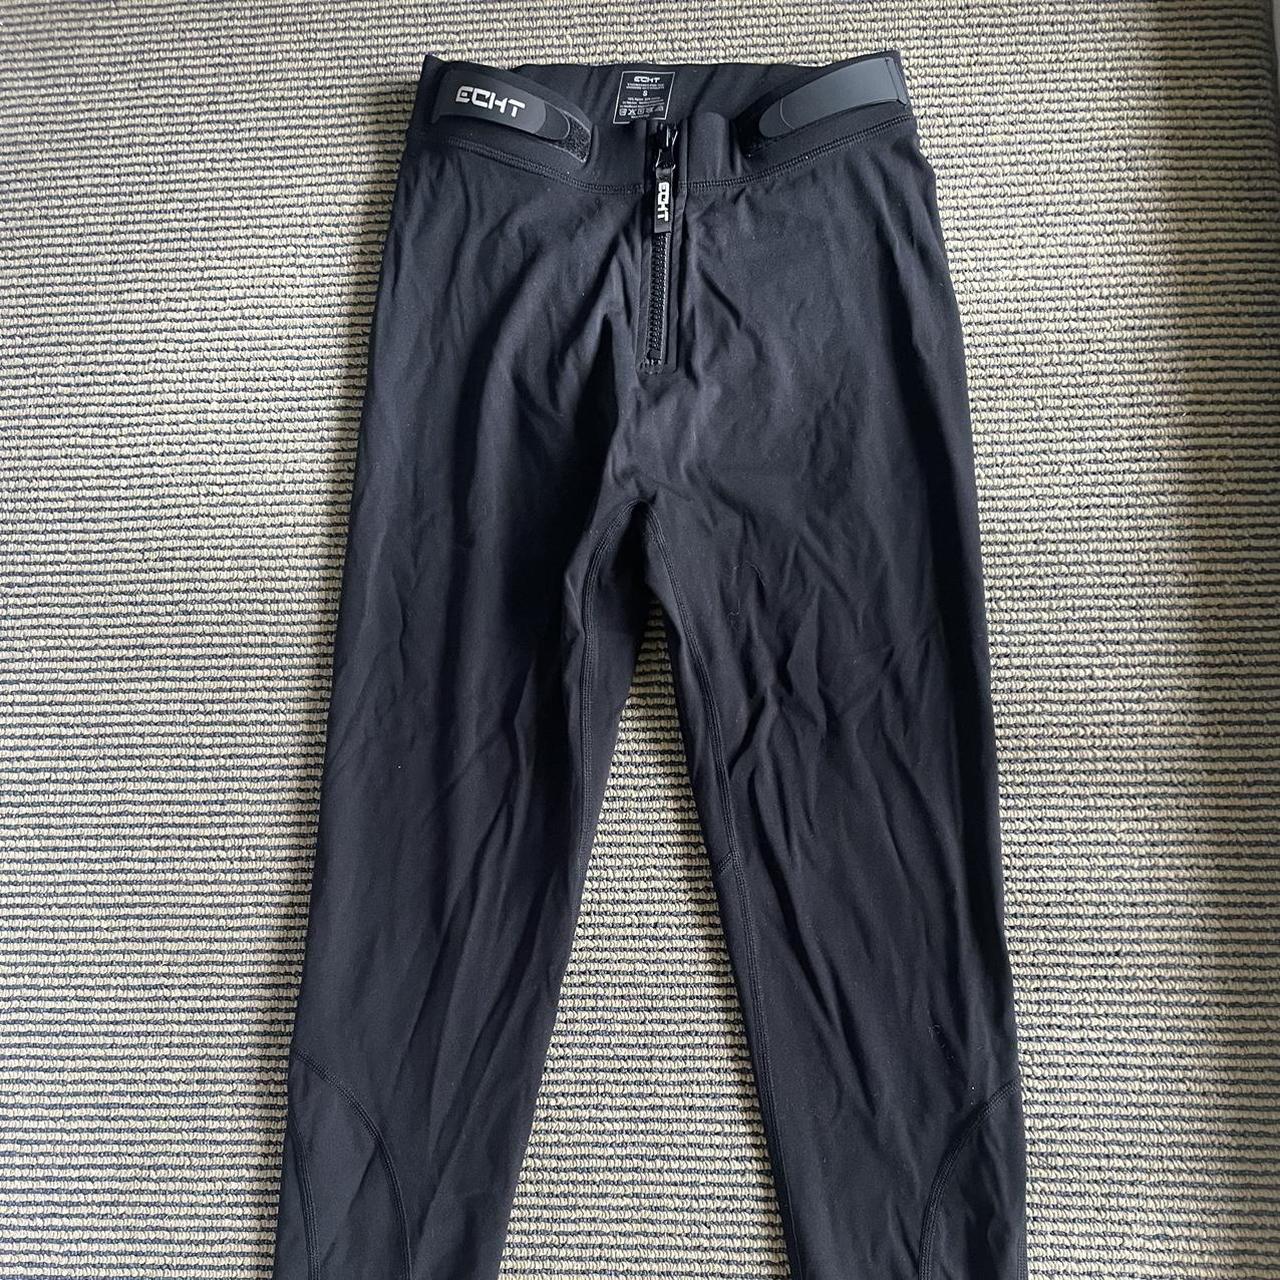 Black Echt scrunch bum leggings Size S - Depop